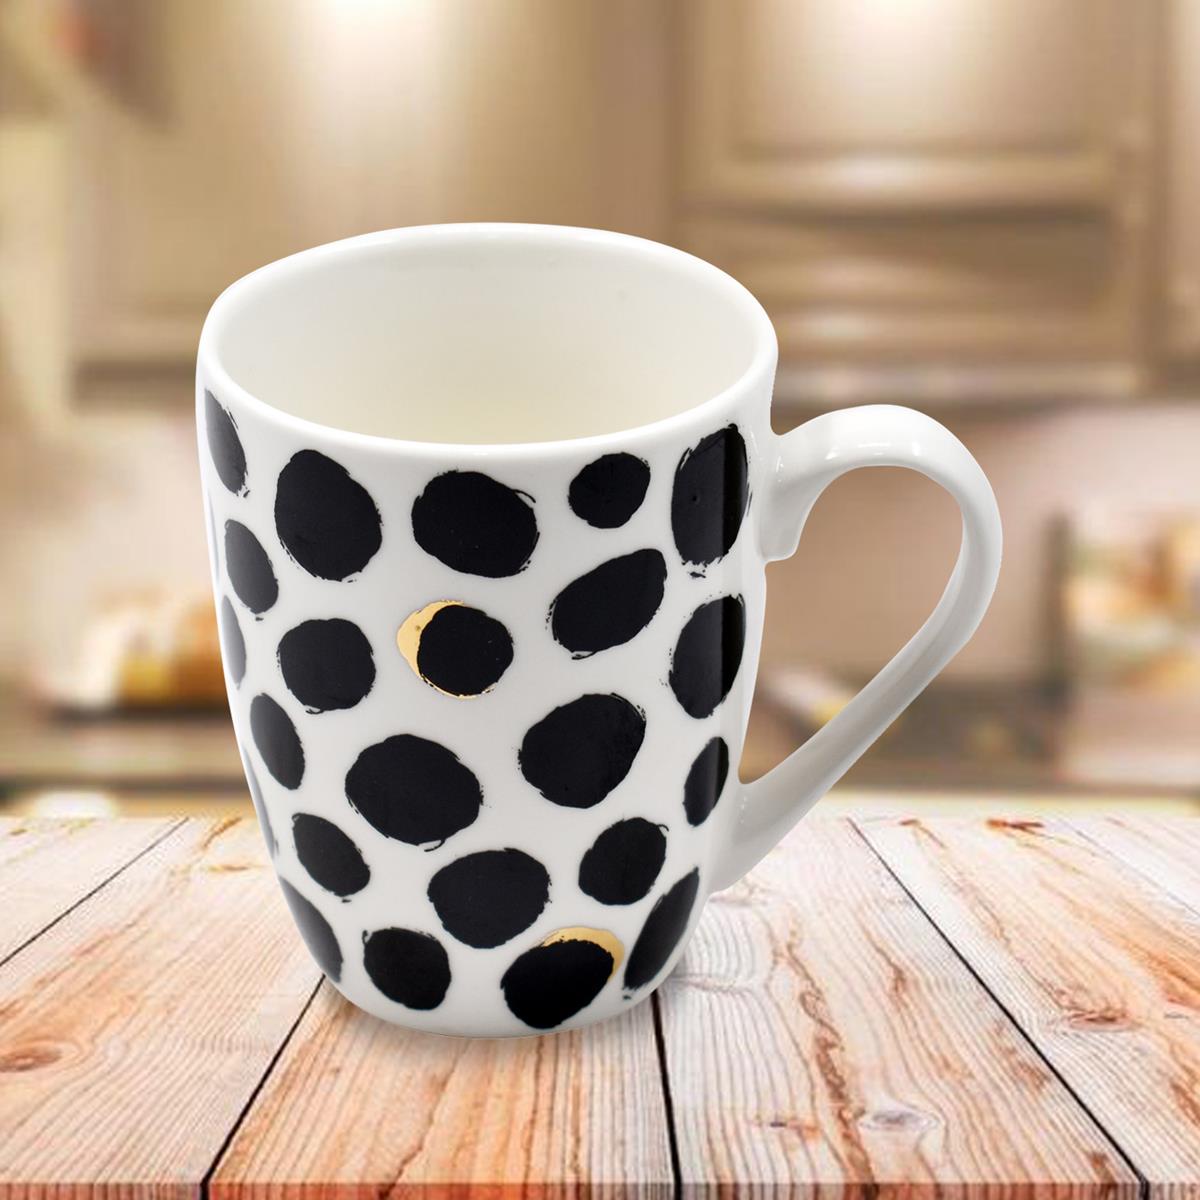 Printed Ceramic Coffee or Tea Mug with handle - 325ml (BPM4338-A)